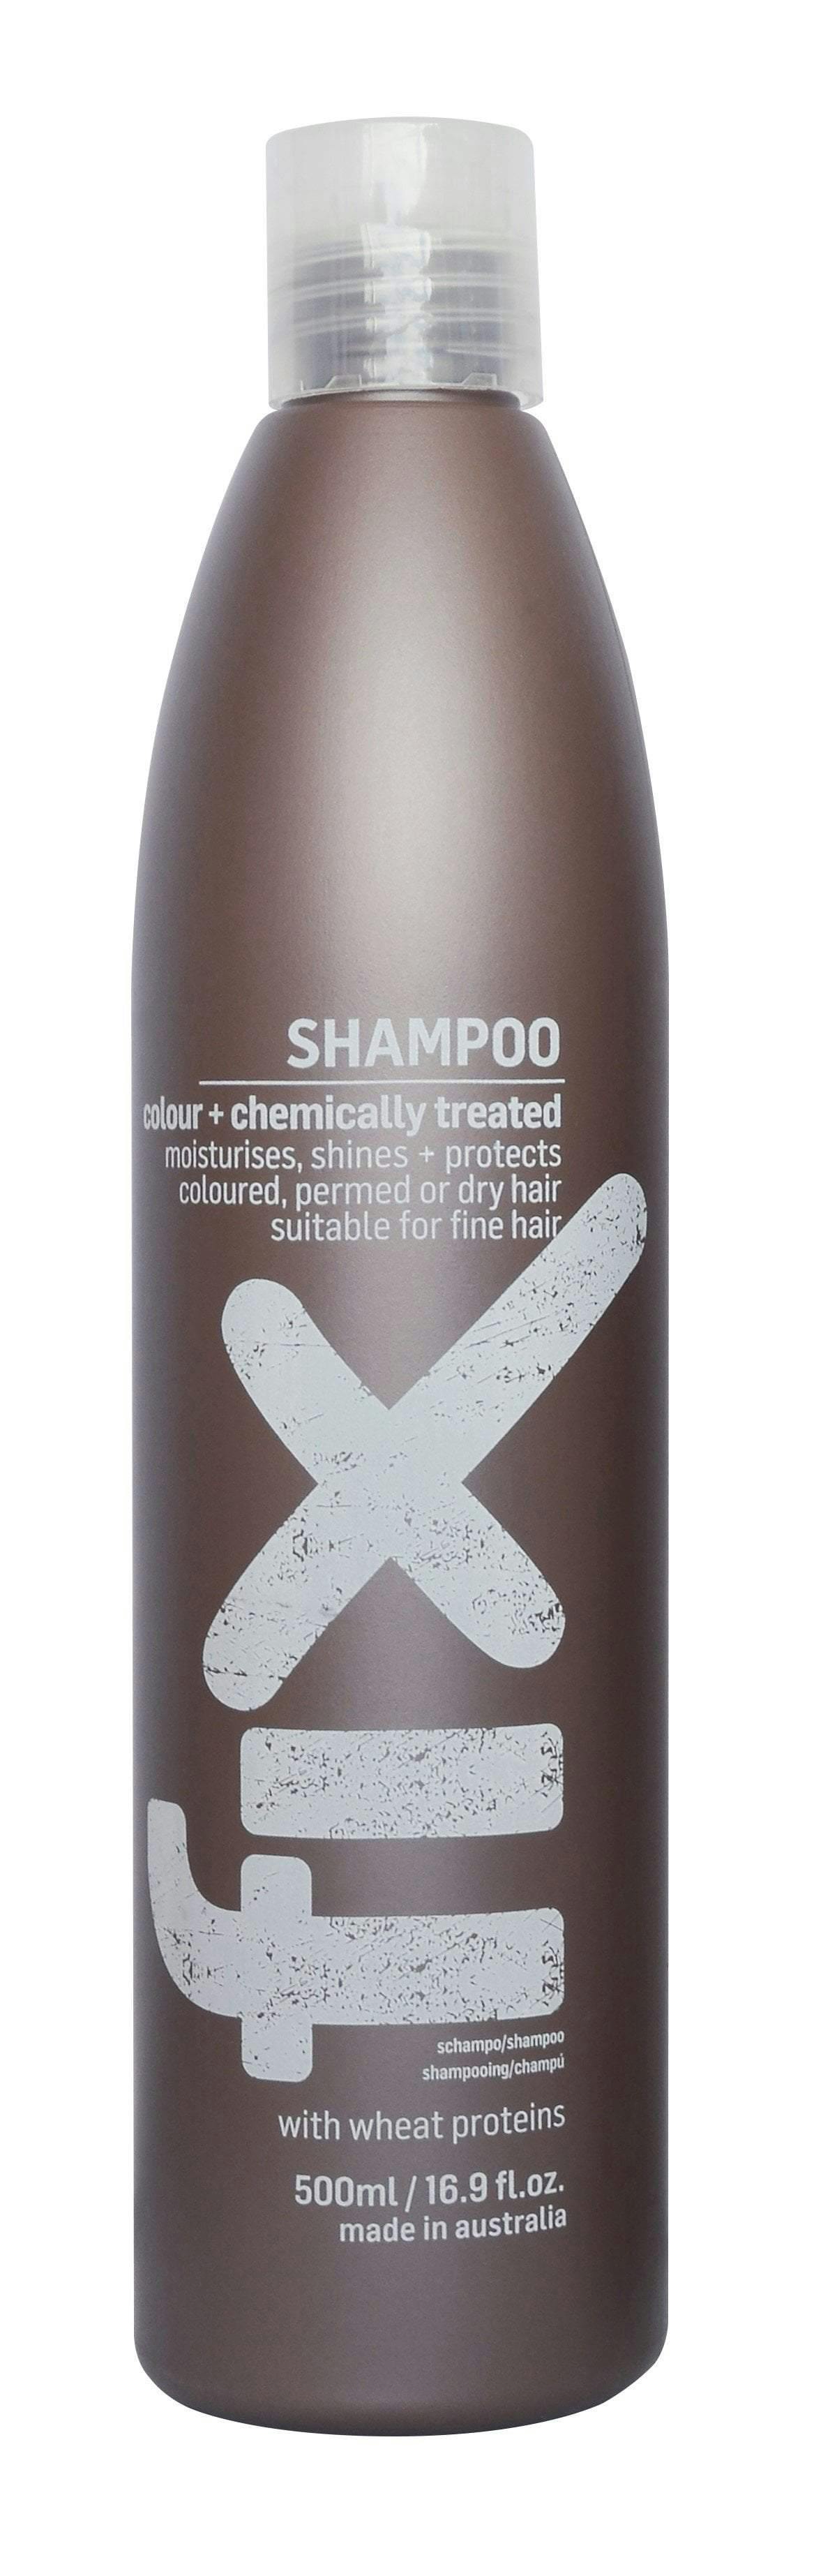 Fix Colour + Chemically Treated Shampoo 500ml